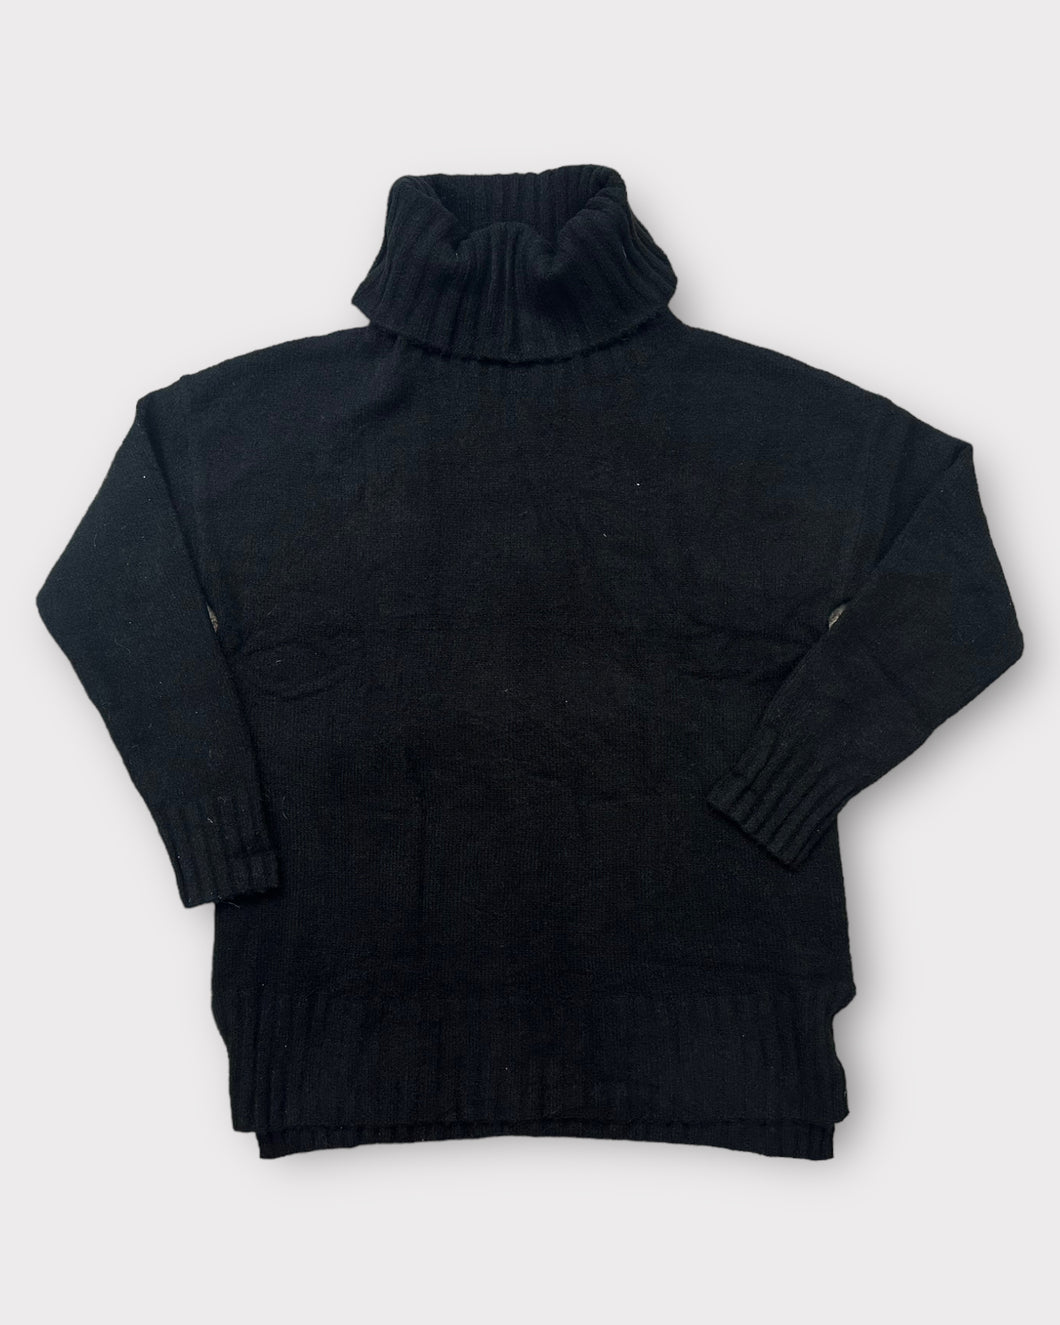 Black Chunky Turtleneck Sweater (XL)